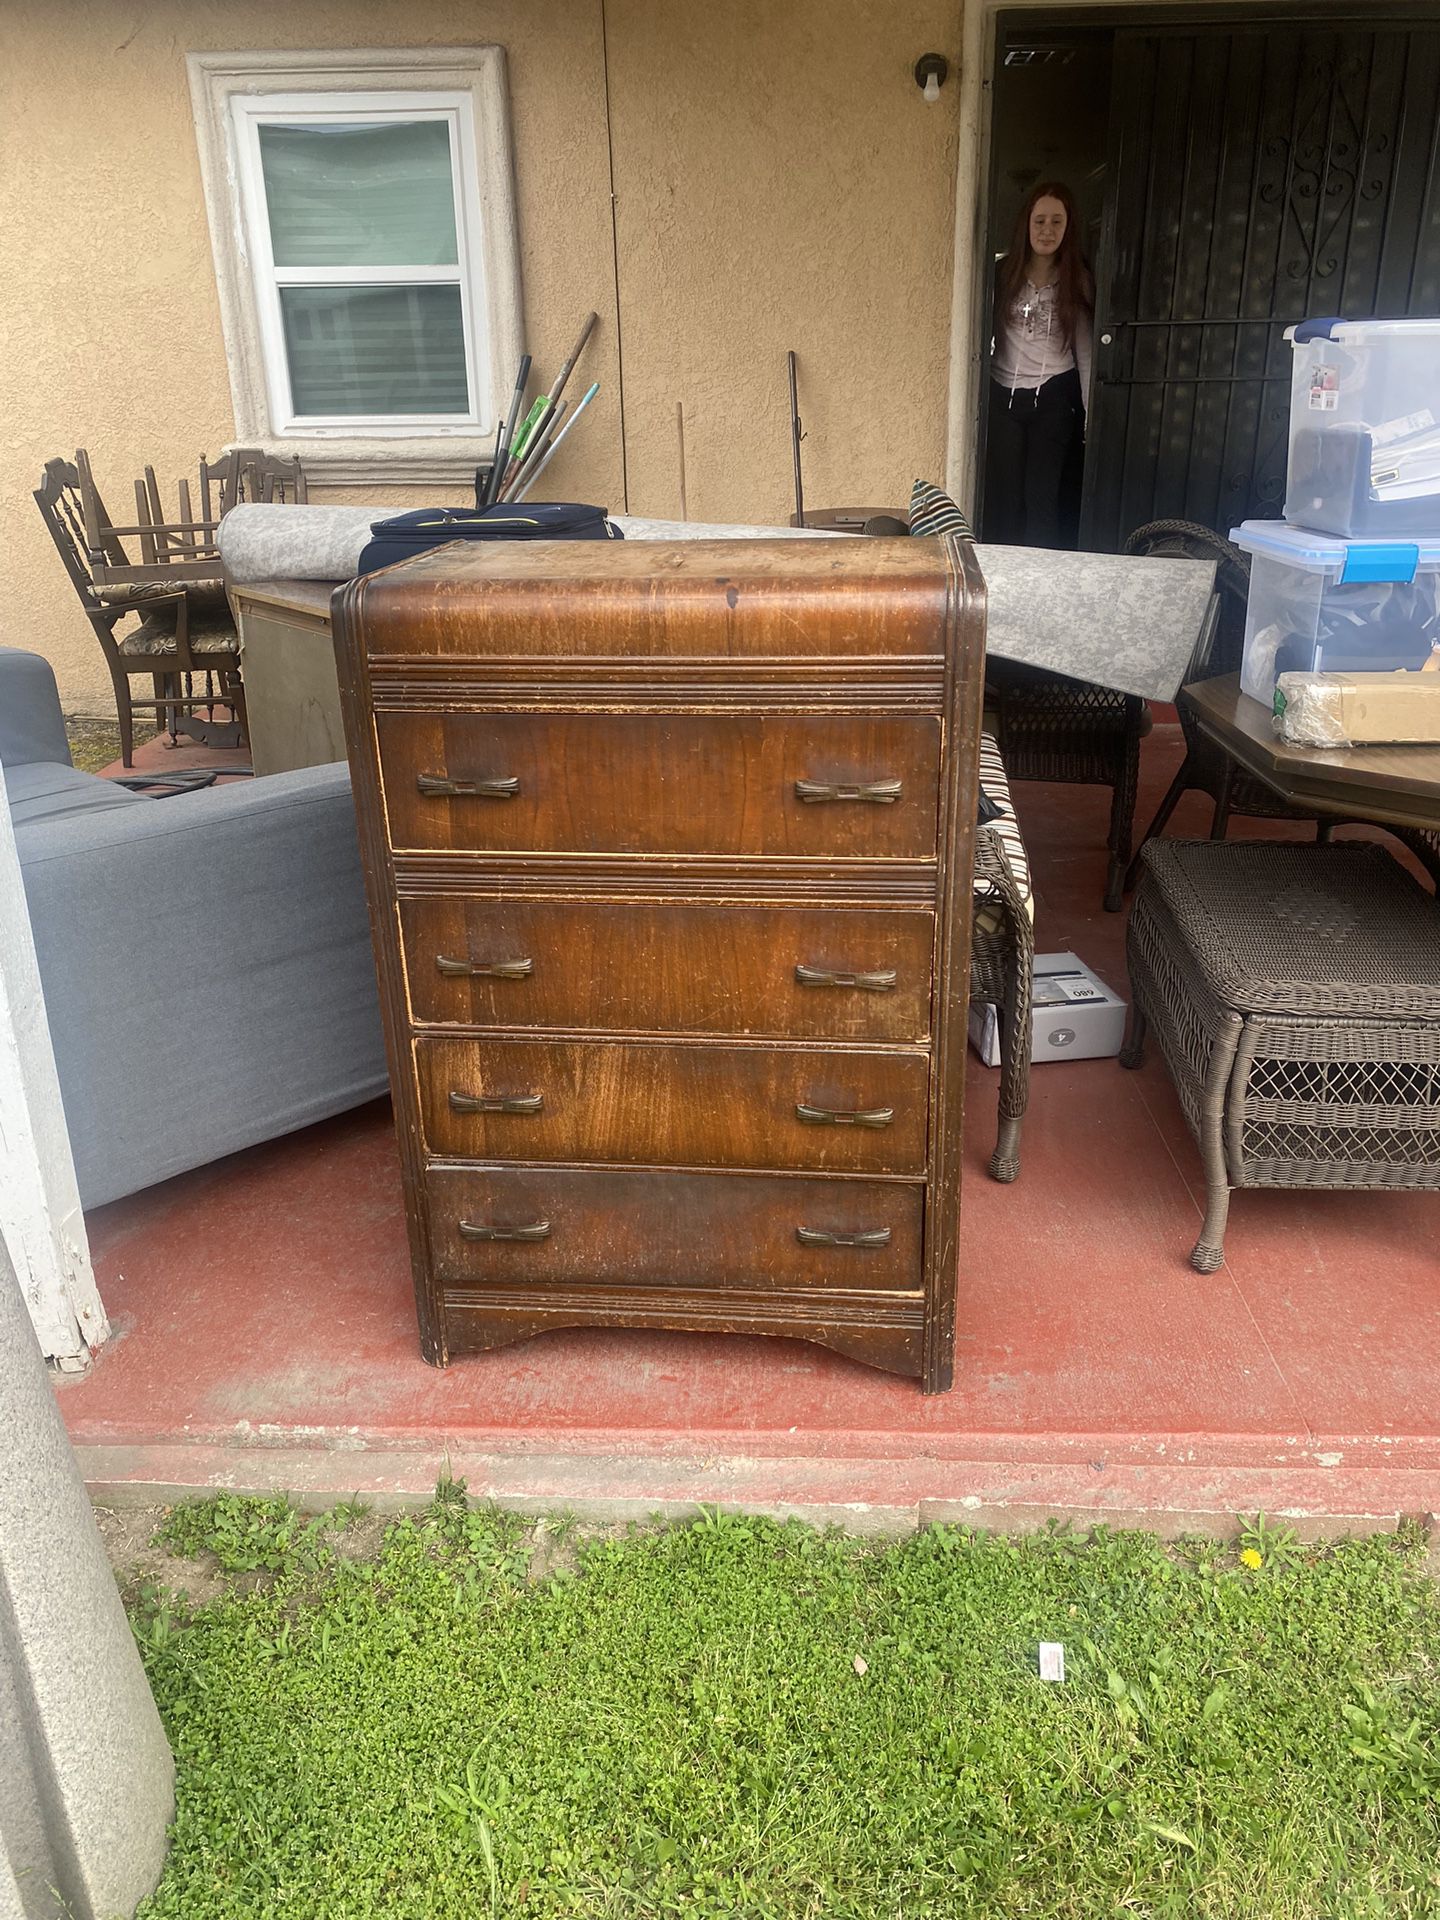 Dresser Antique 